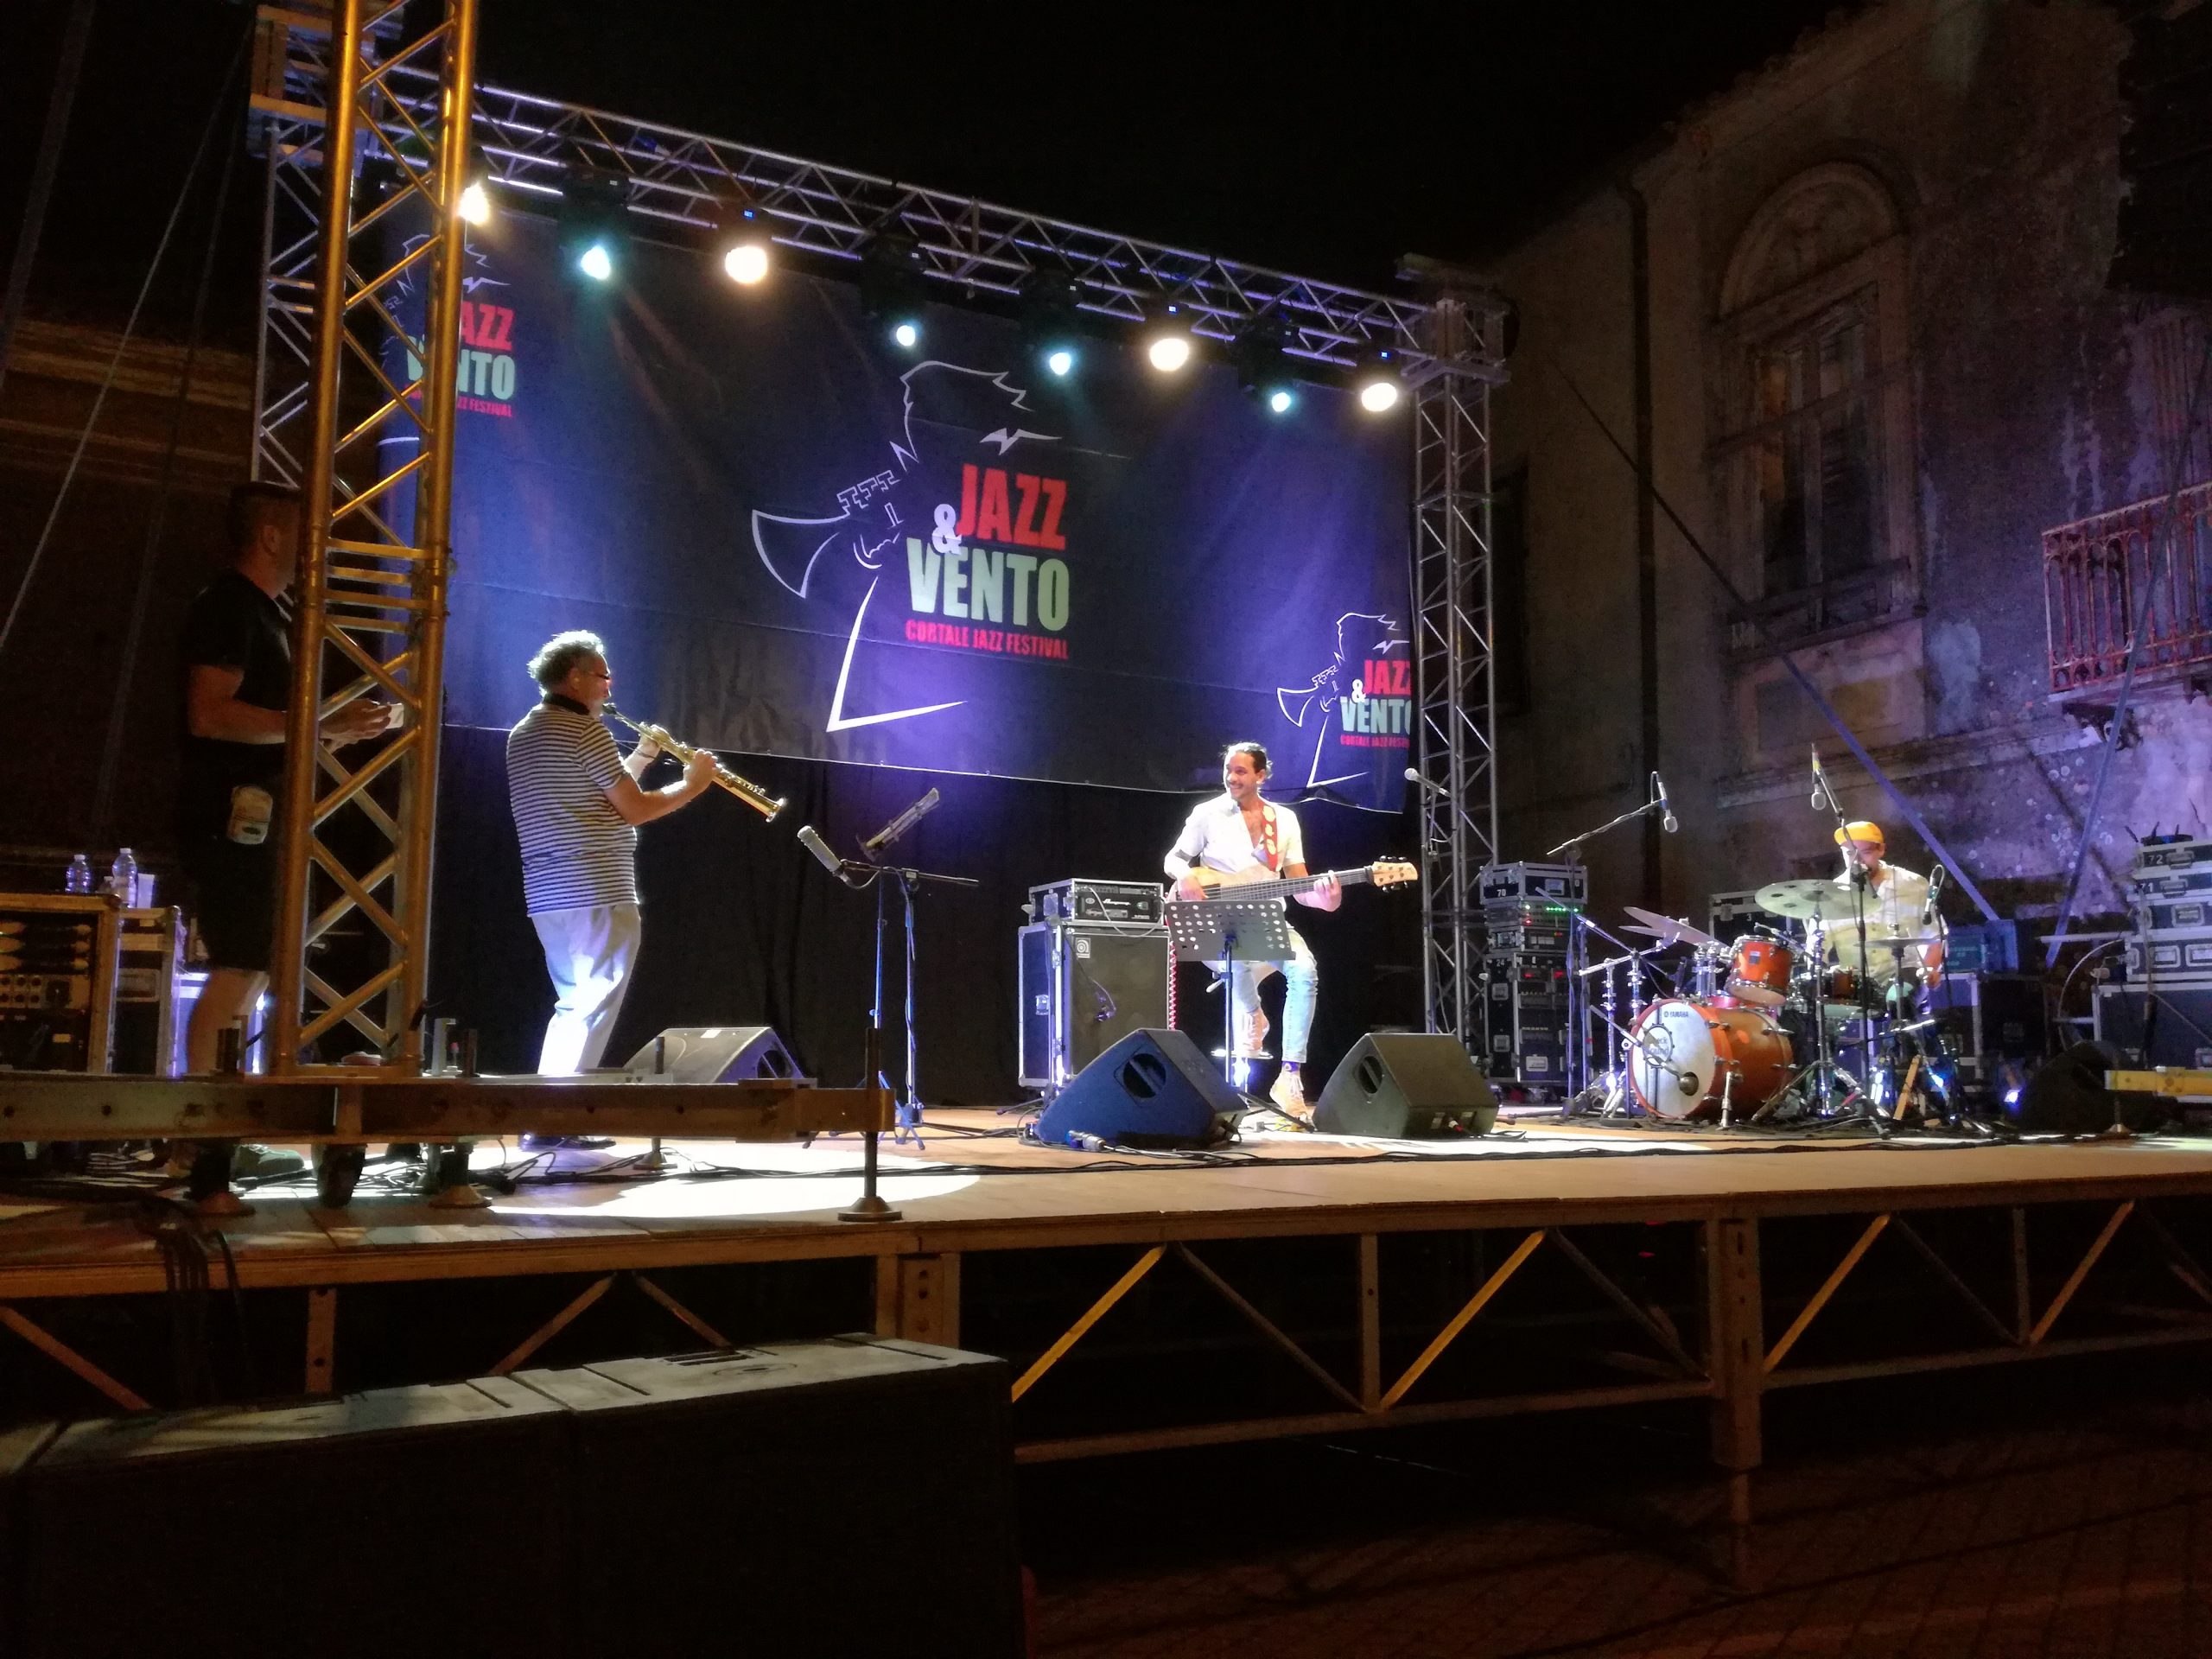 TJLT at Jazz&Vento Festival, Cortale (CZ) IT